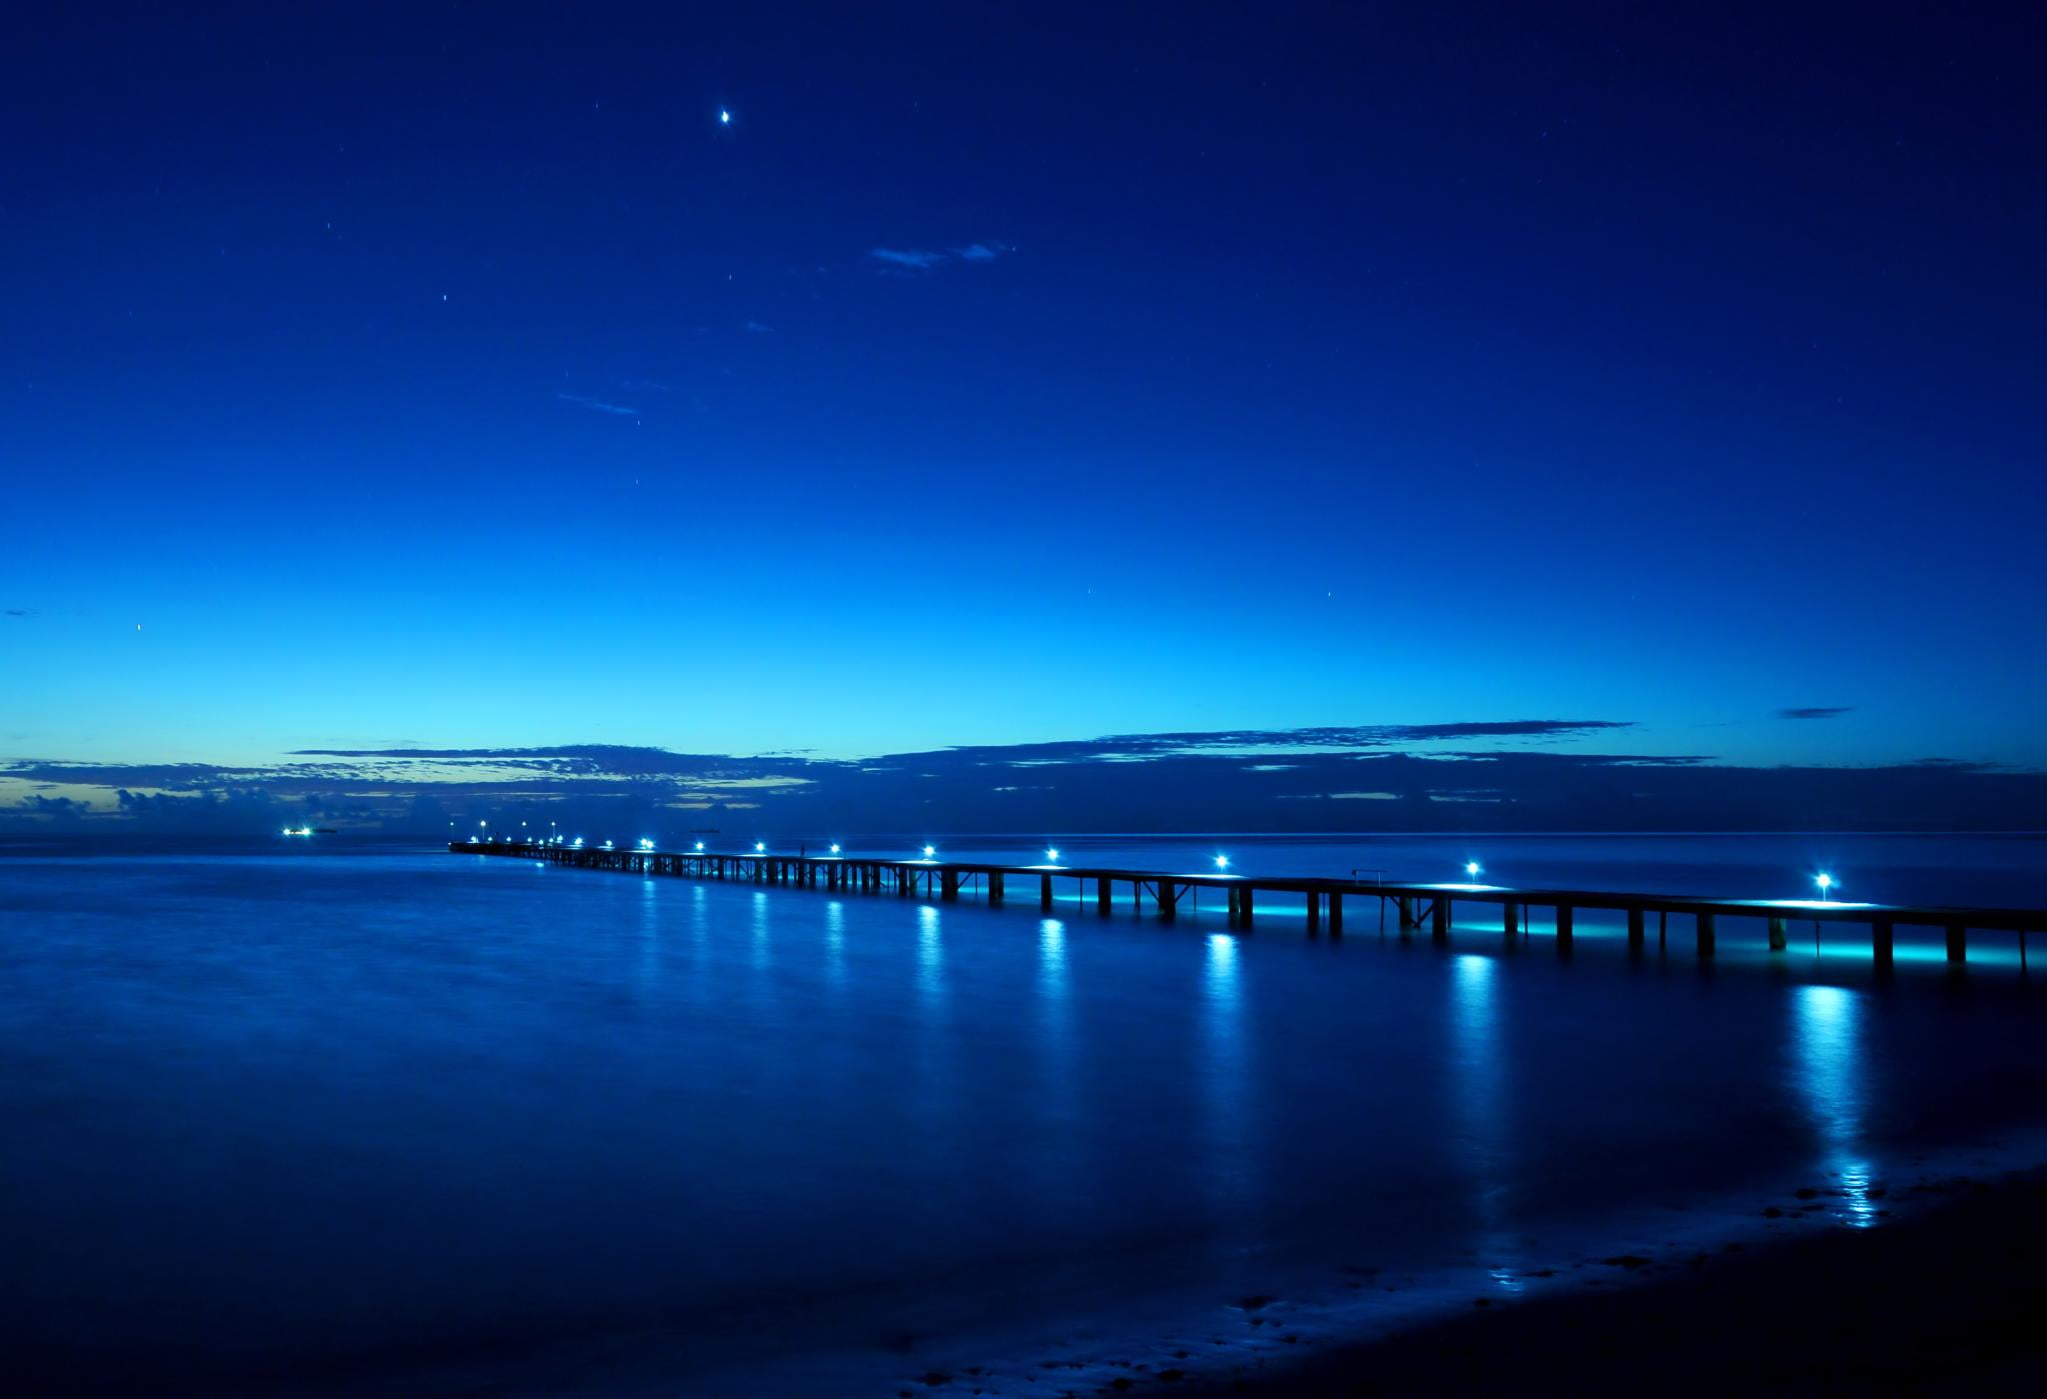 bridge on water under blue sky, never give up, maldives, island